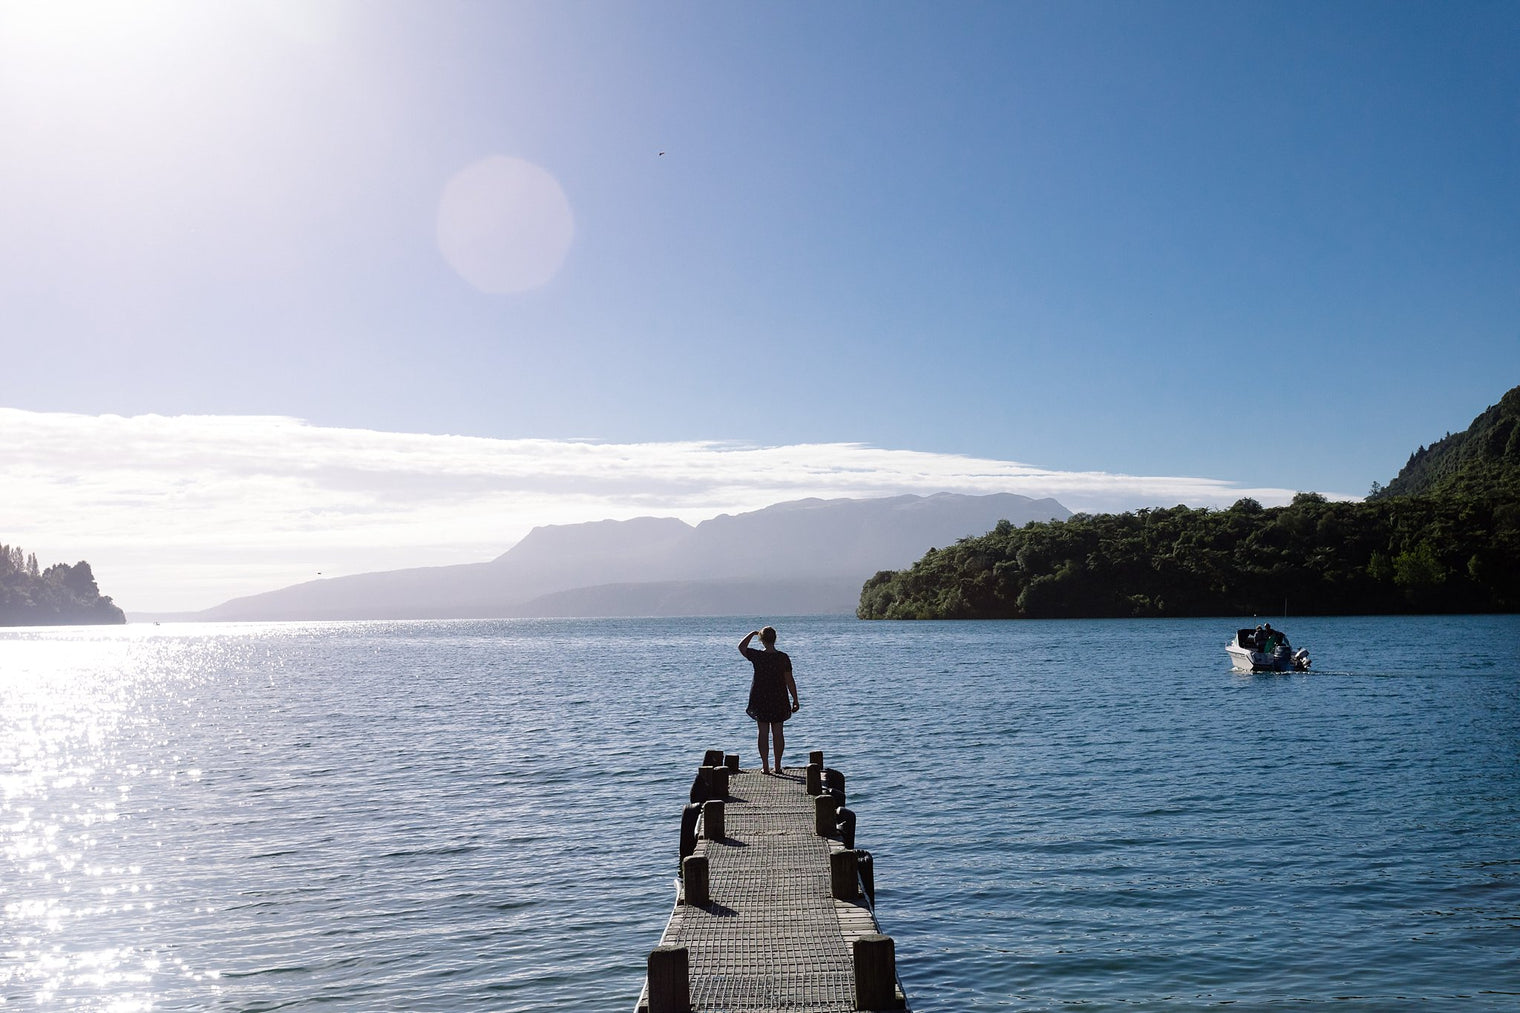 Lake Tarawera, Rotorua